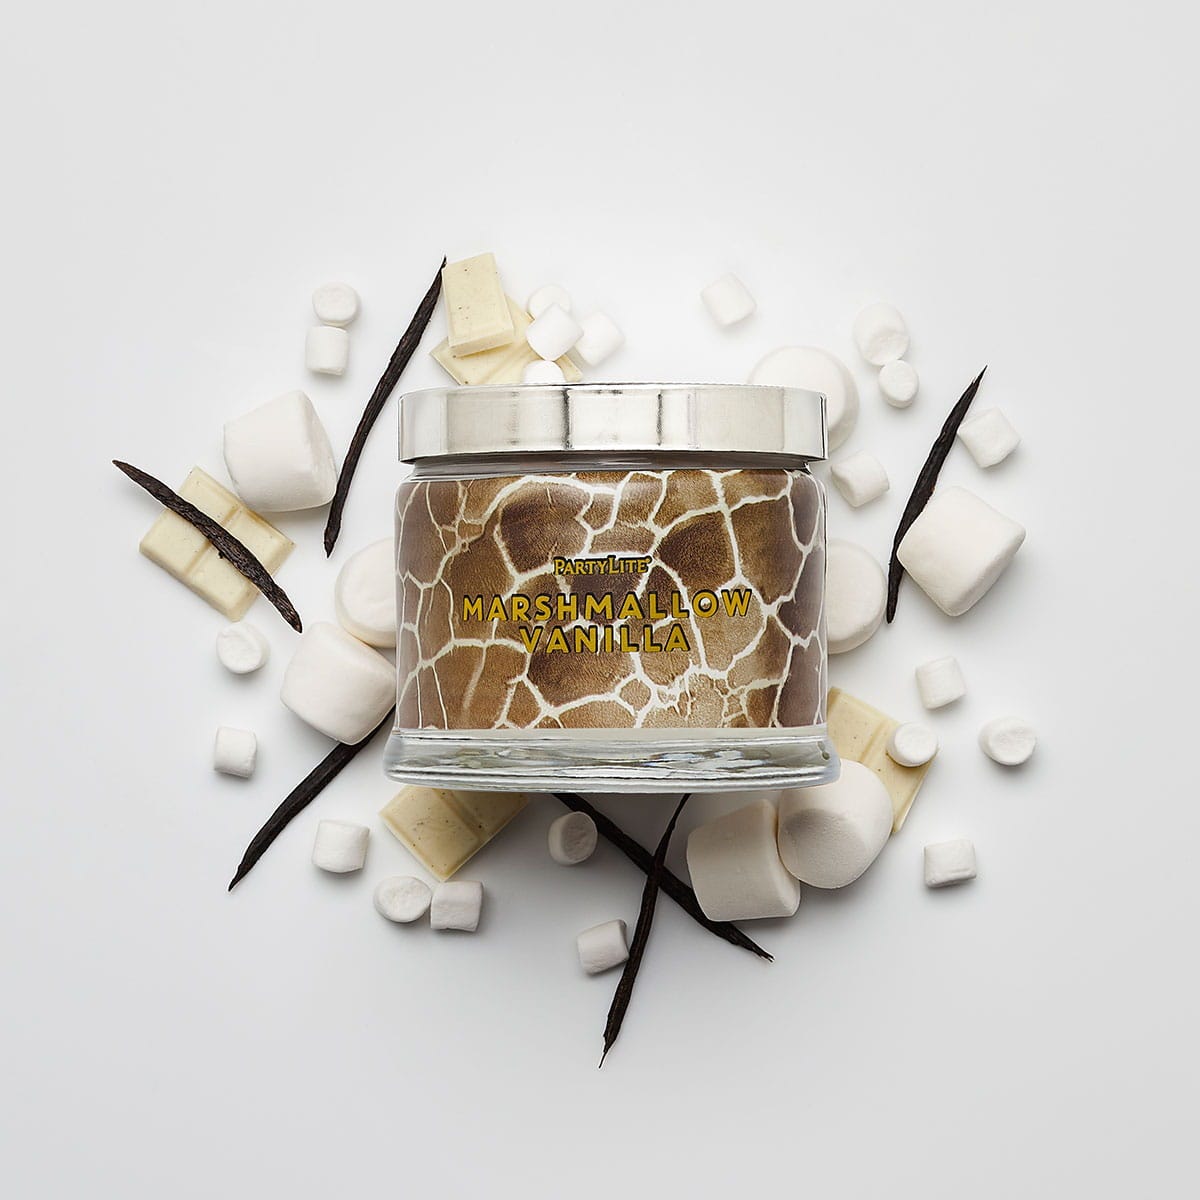 Marshmallow Vanilla Giraffe Print 3-Wick Jar Candle